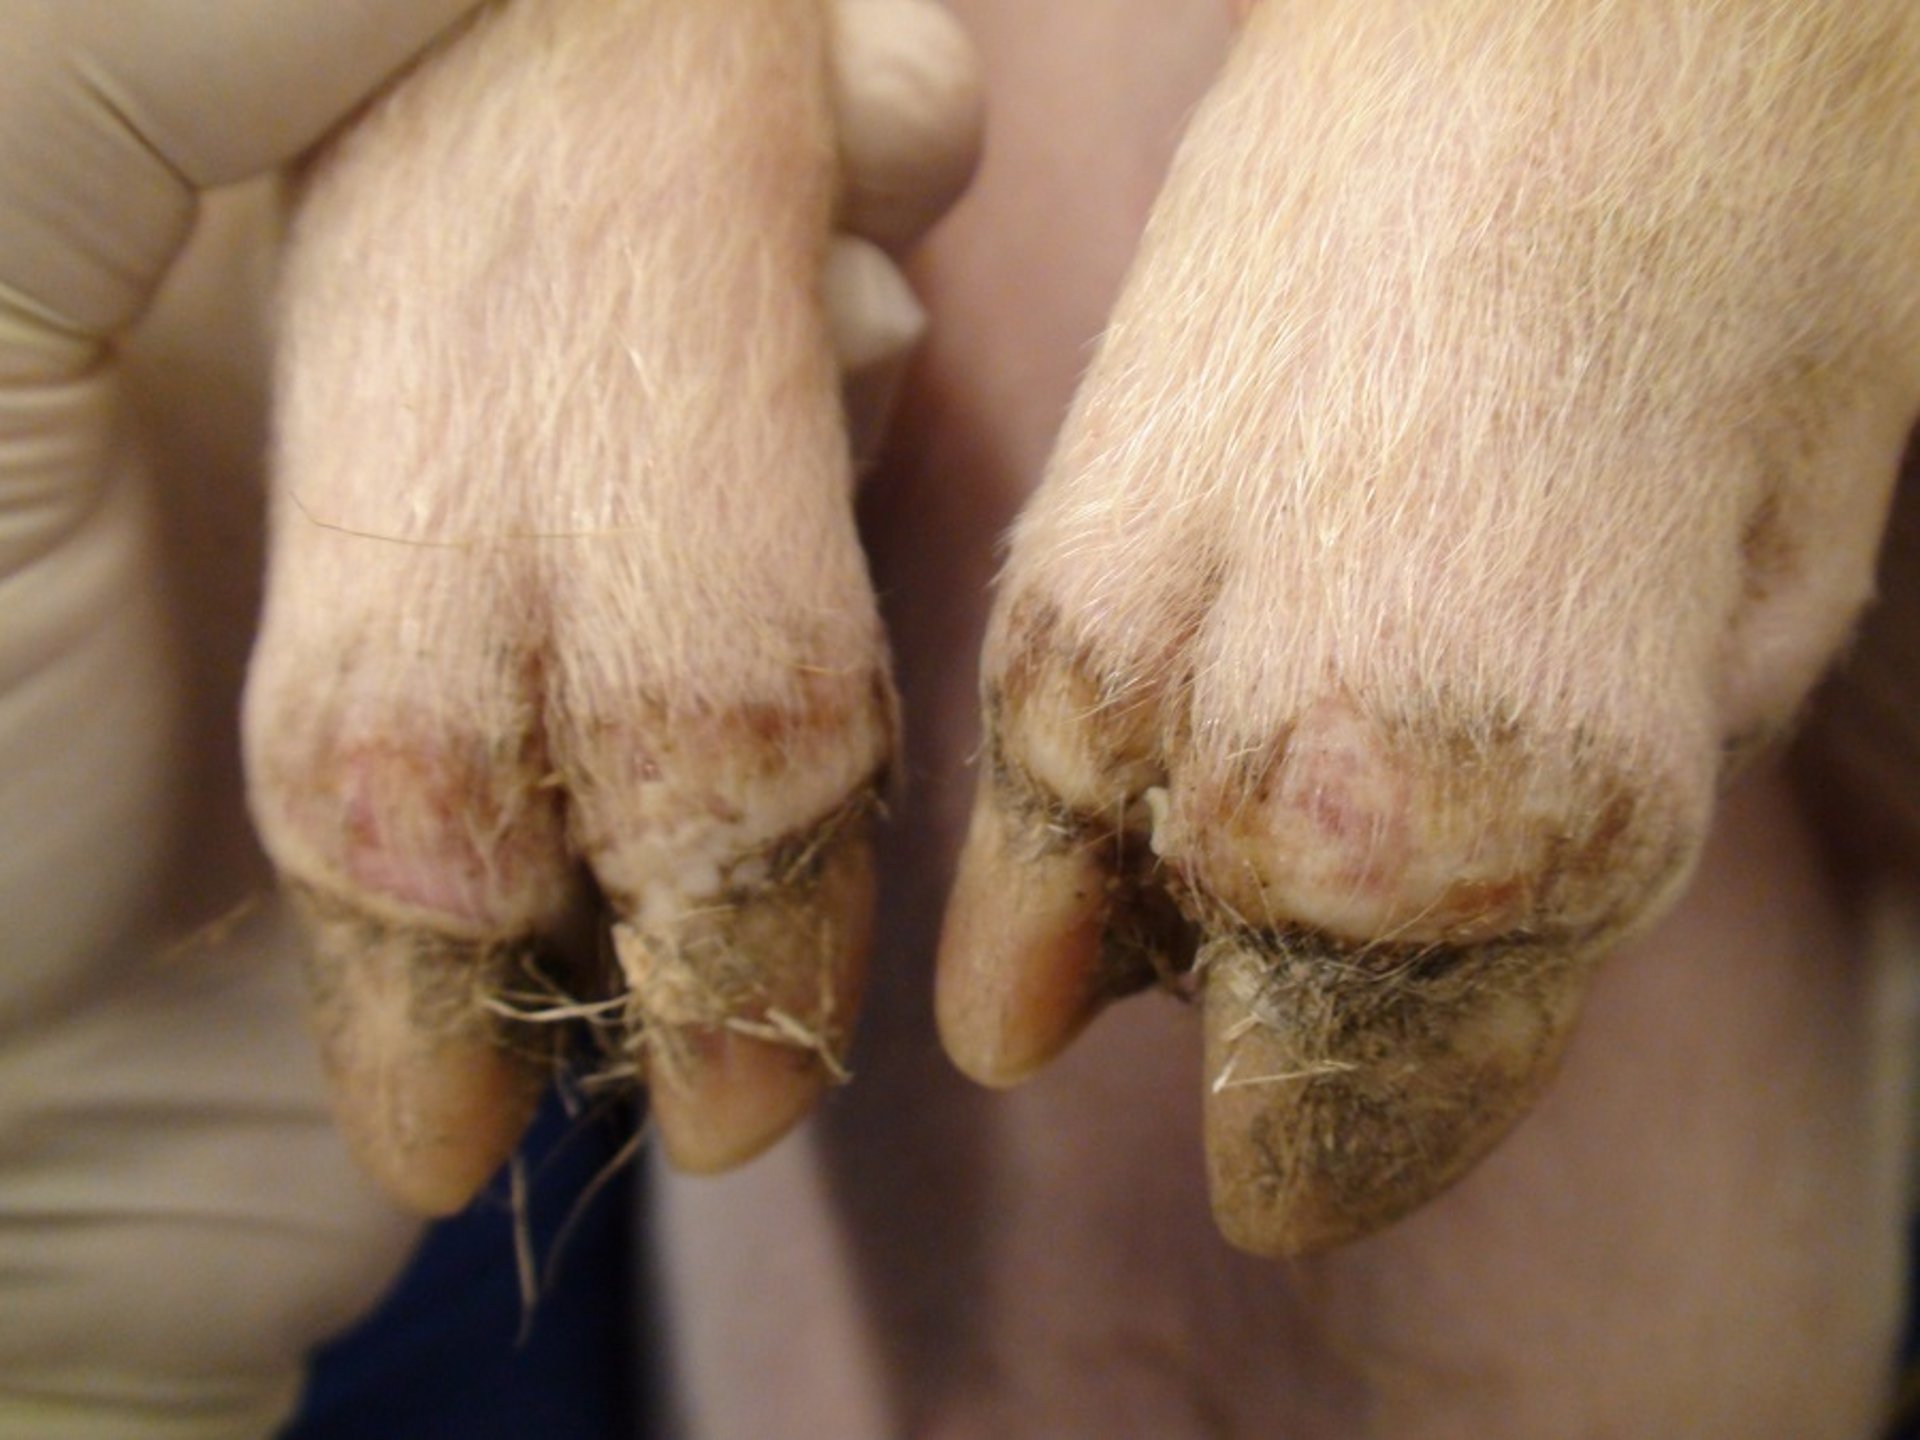 Foot lesions, pig